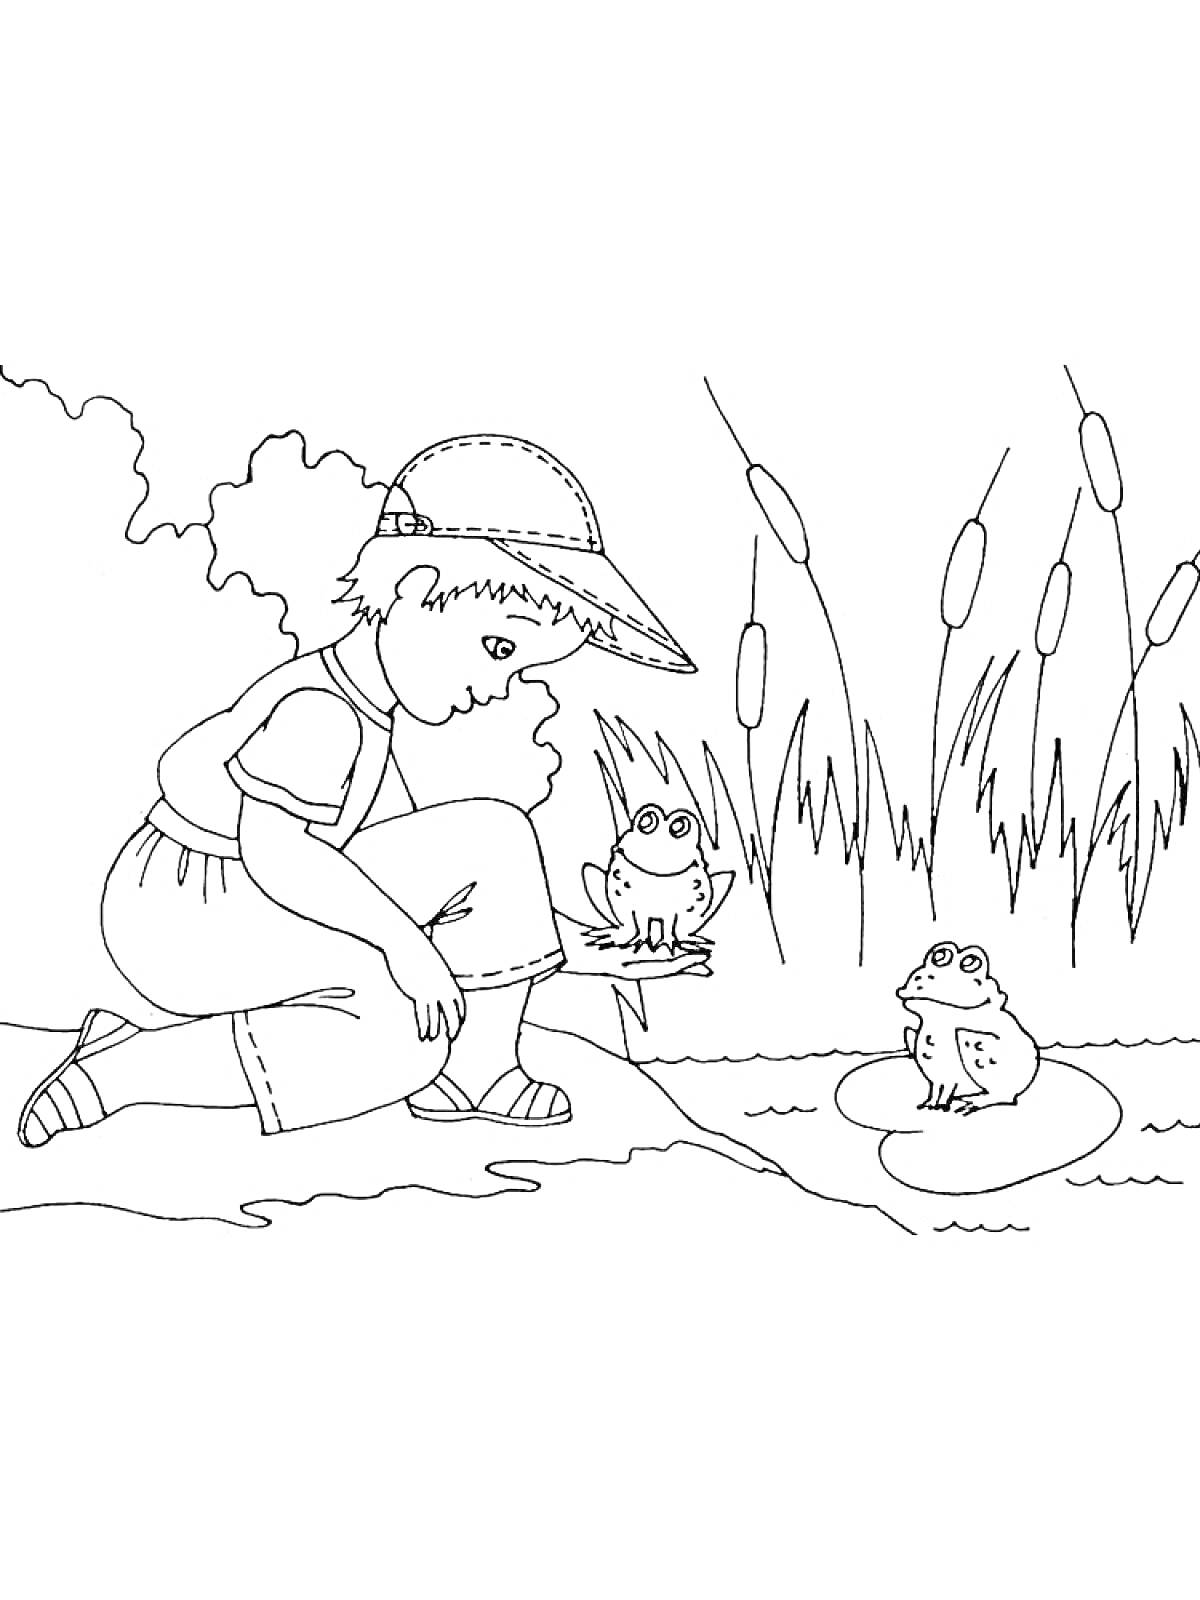 Раскраска Ребенок в шляпе разговаривает с лягушками на берегу пруда